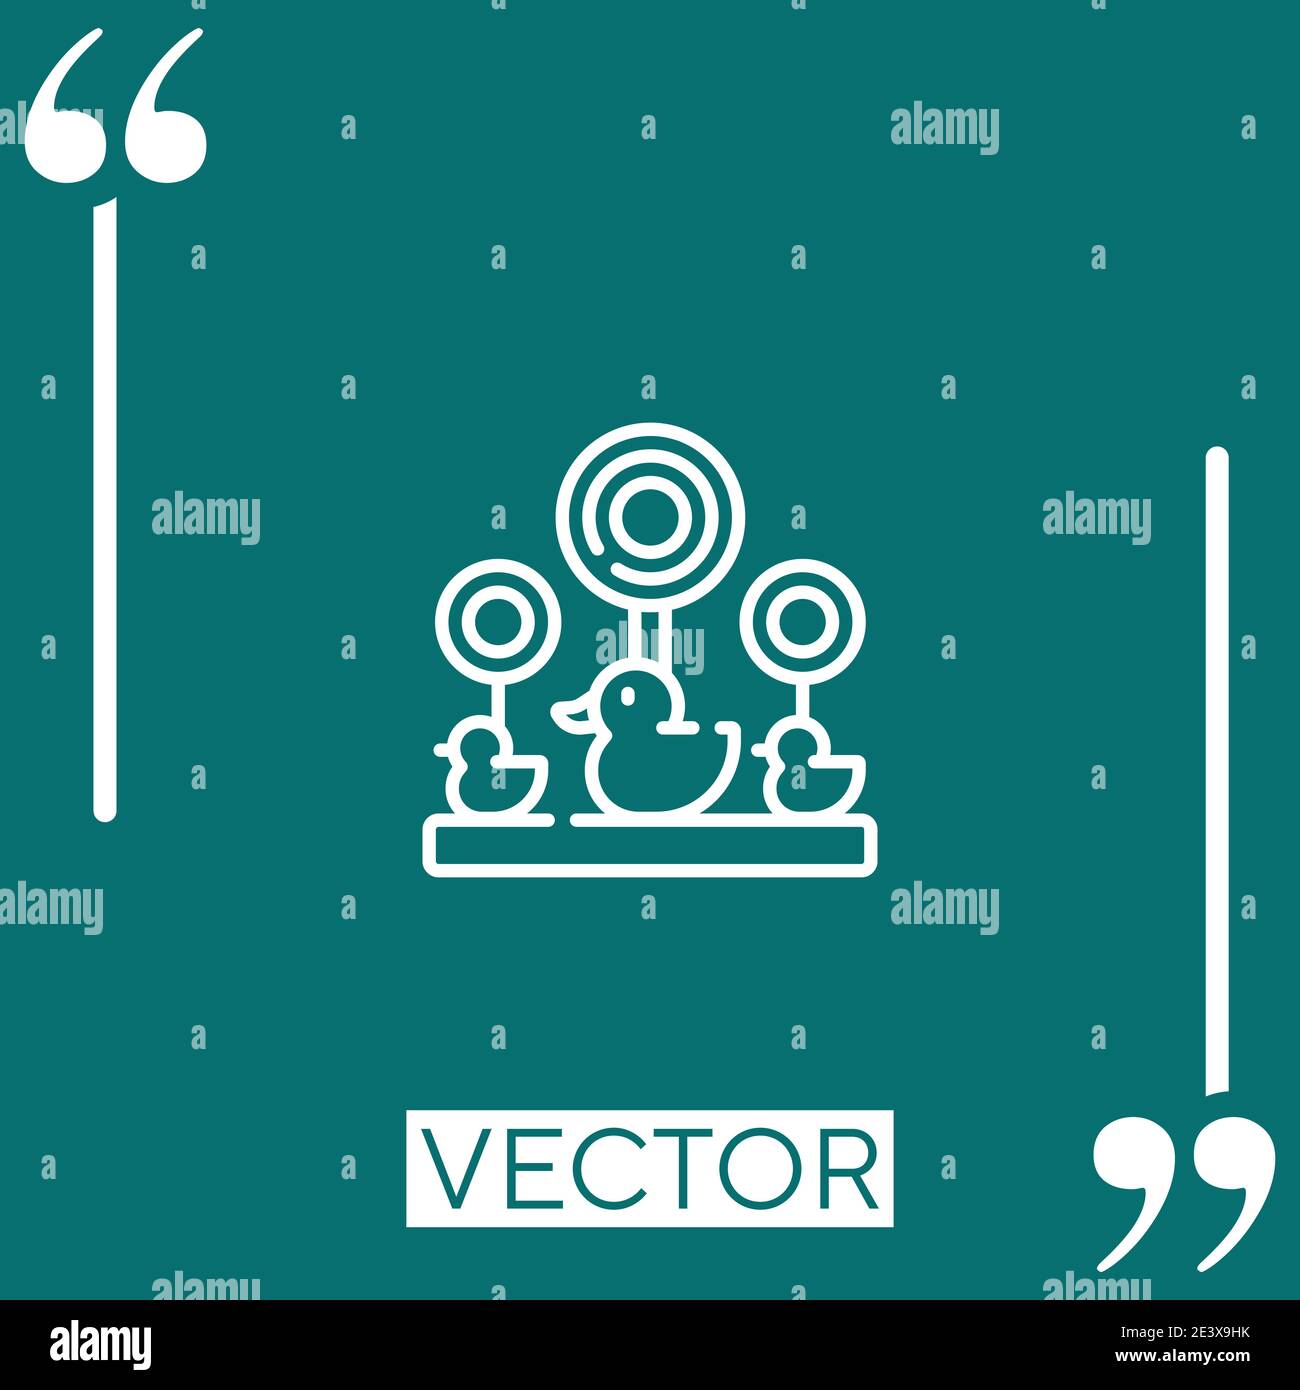 shoot duck vector icon Linear icon. Editable stroked line Stock Vector